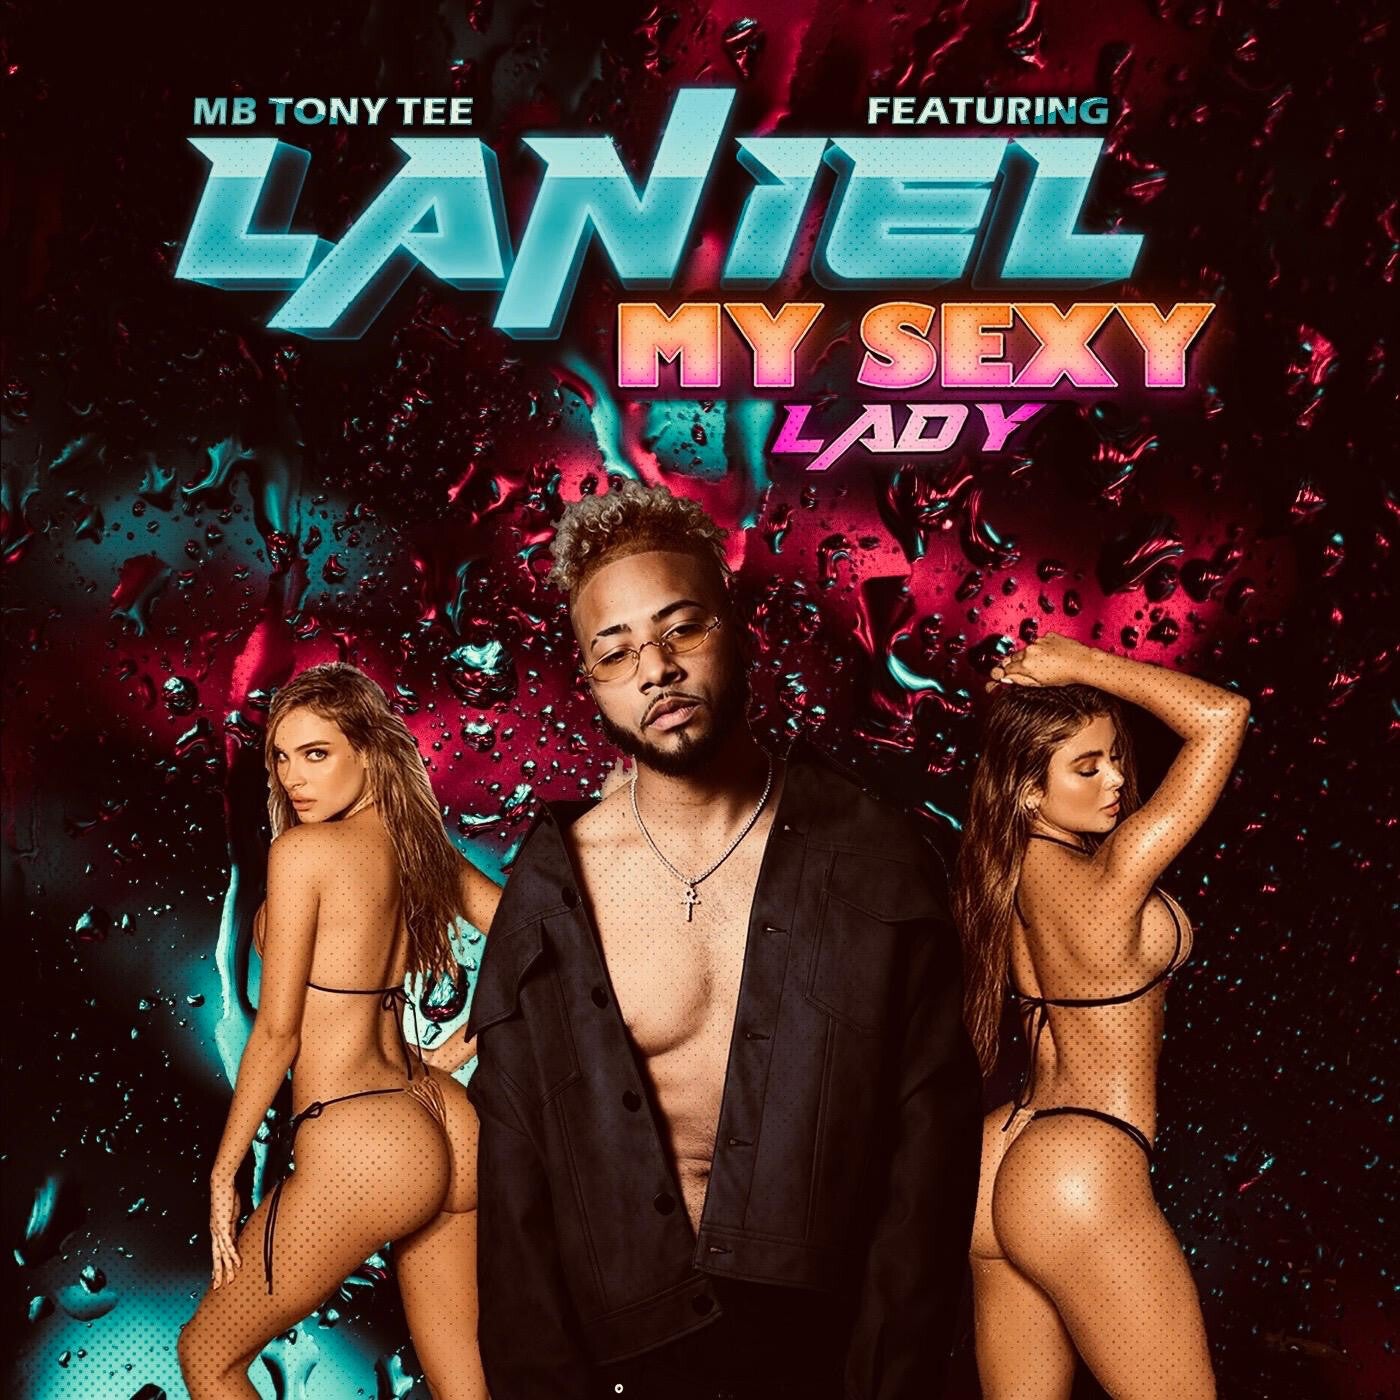 MY SEXY LADY (feat. Laniel)